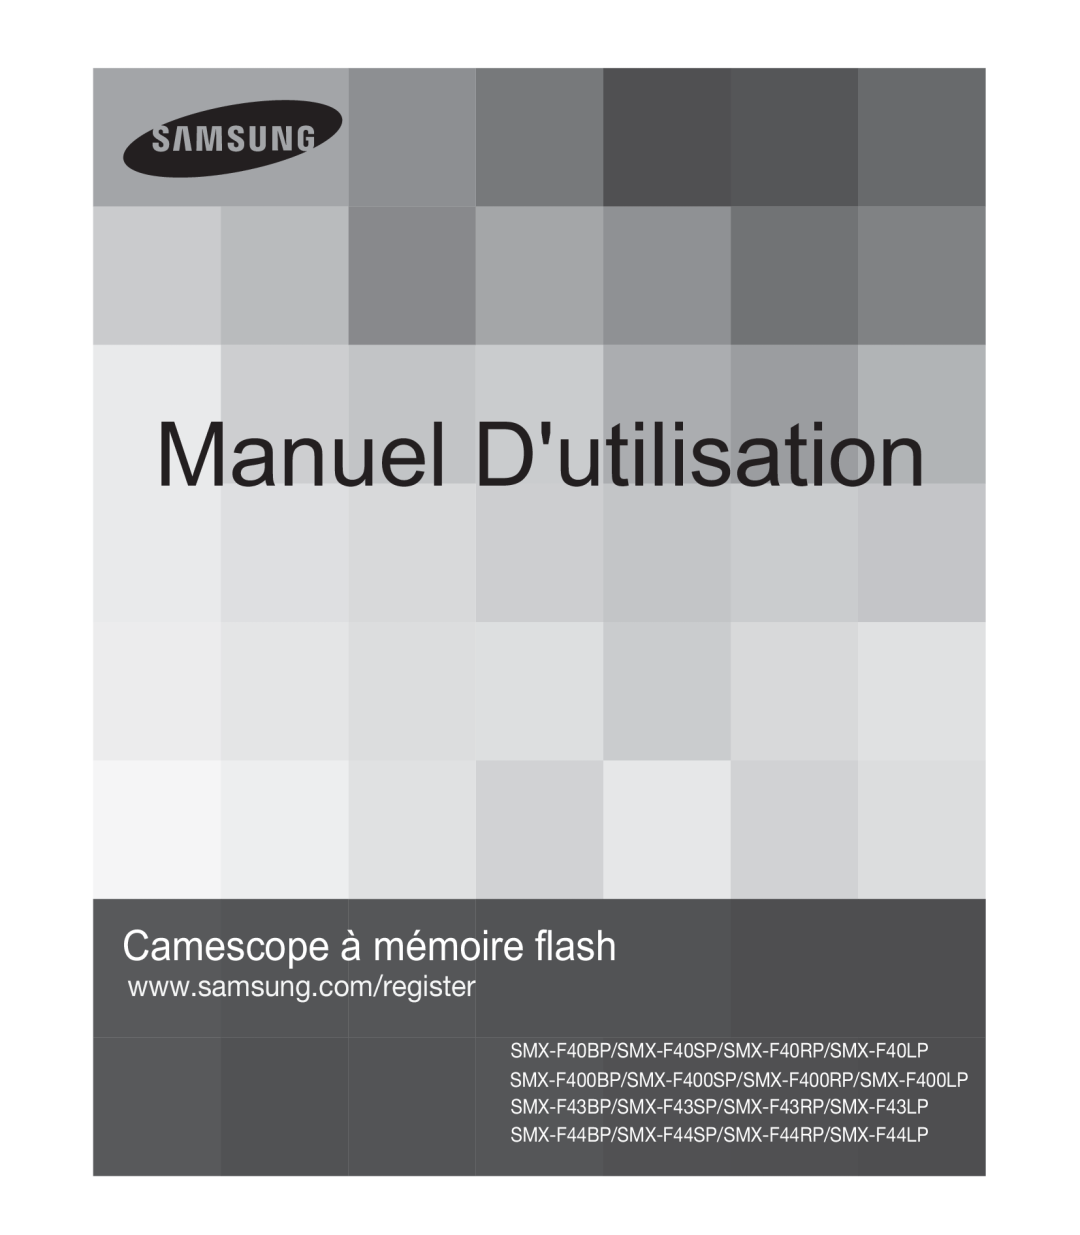 Samsung SMX-F400BP/EDC manual Manuel Dutilisation, DPHVFRSHjPpPRLUHÀDVK, SMX-F40BP/SMX-F40SP/SMX-F40RP/SMX-F40LP 